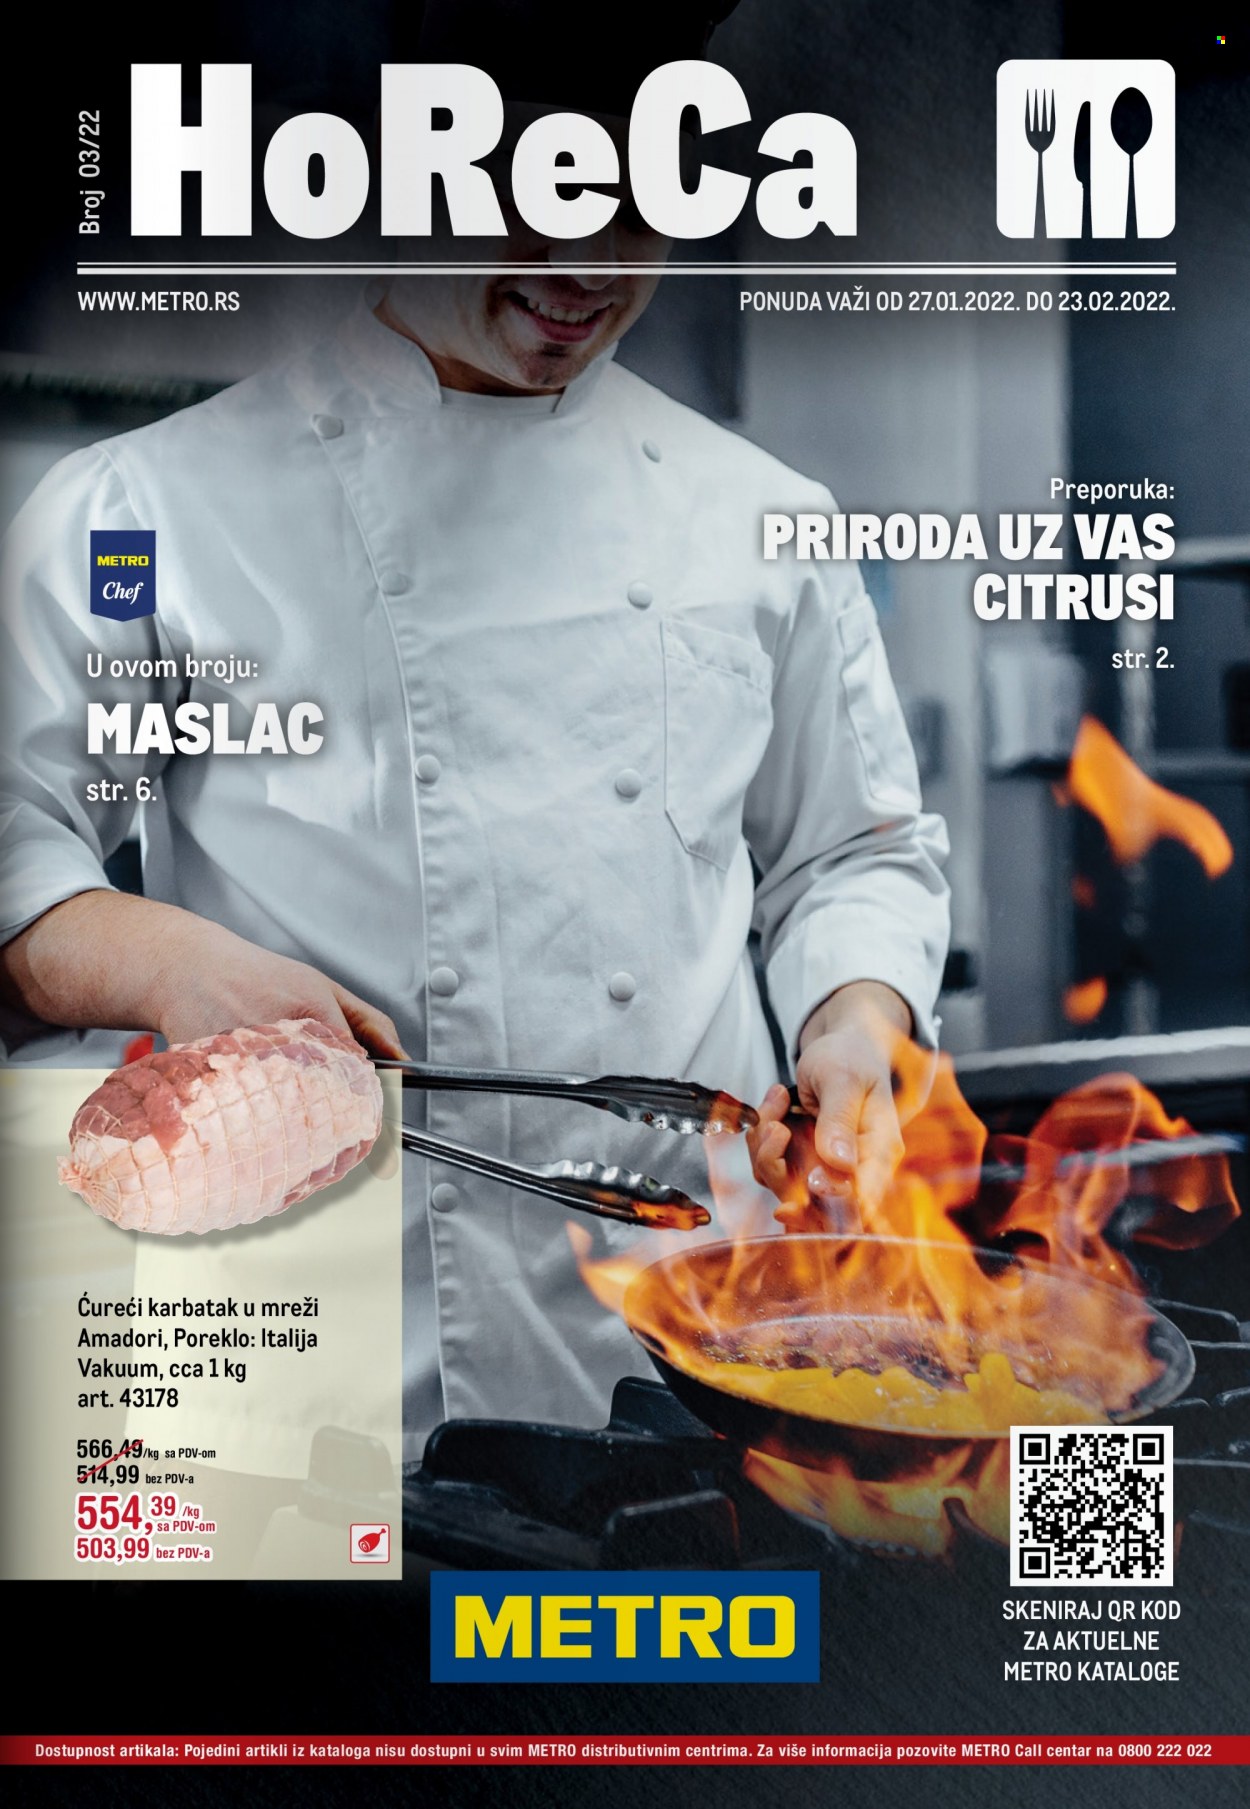 thumbnail - Metro katalog - 27.01.2022 - 23.02.2022 - Proizvodi na akciji - Metro Chef, maslac. Stranica 1.